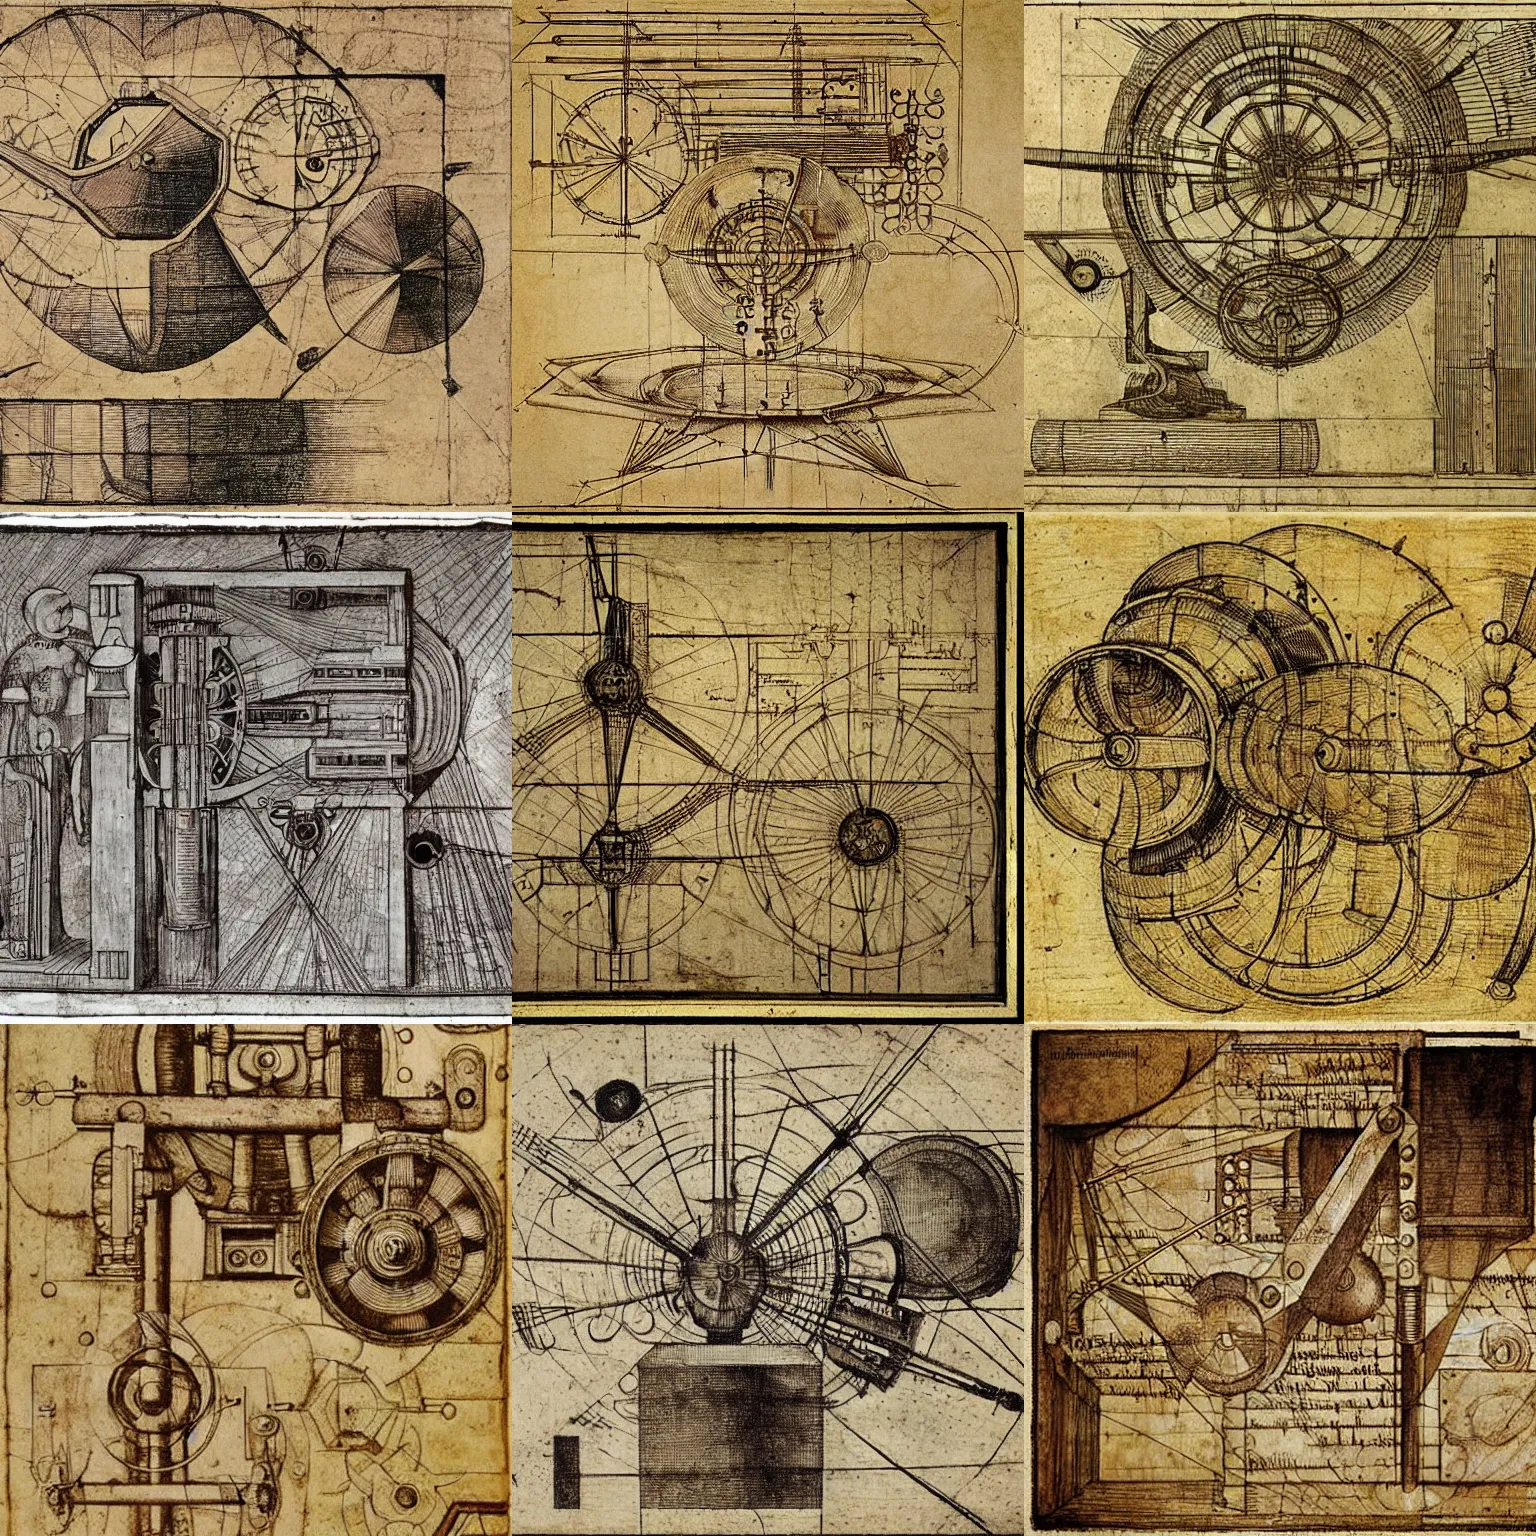 Prompt: a love-making machine, hyperdetailed, schematic drawing by Leonardo Da Vinci